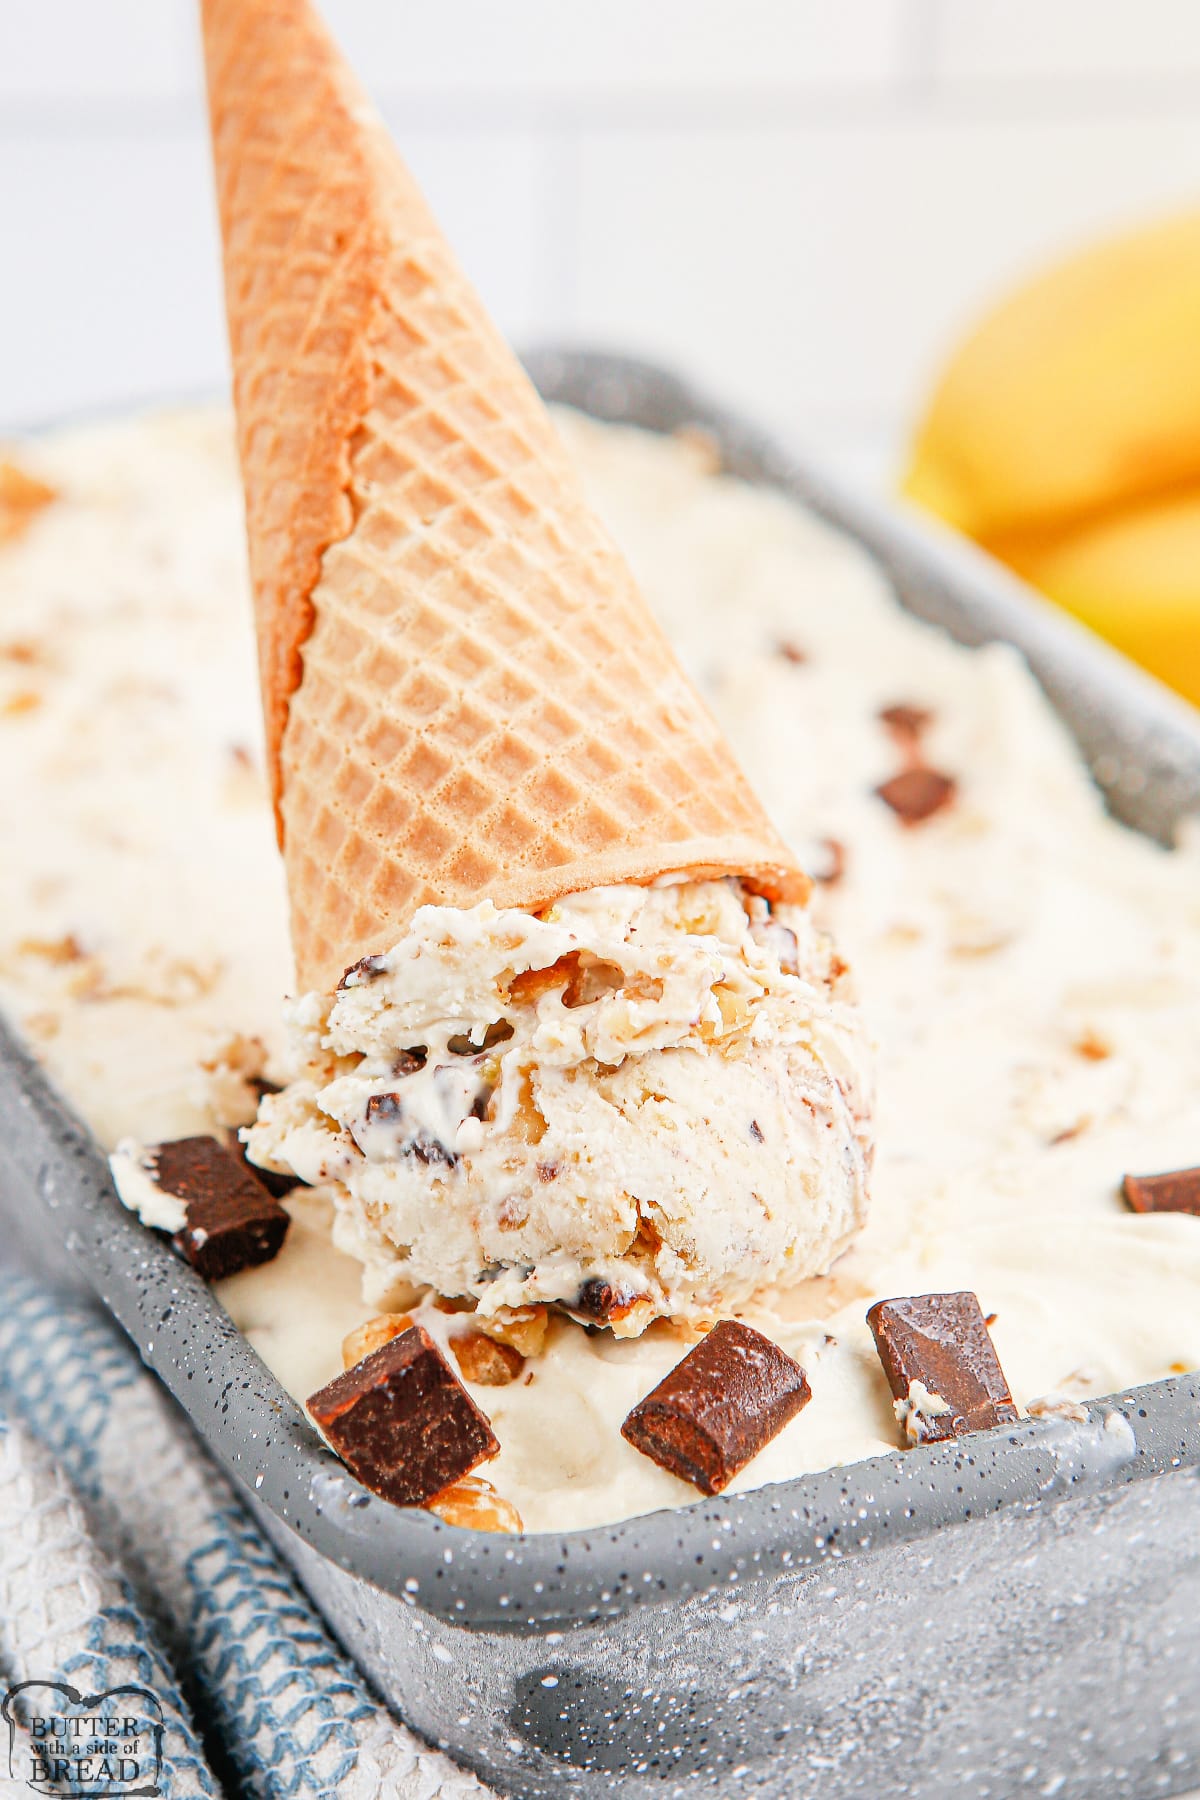 No churn vanilla ice cream recipe with bananas, walnuts and chocolate